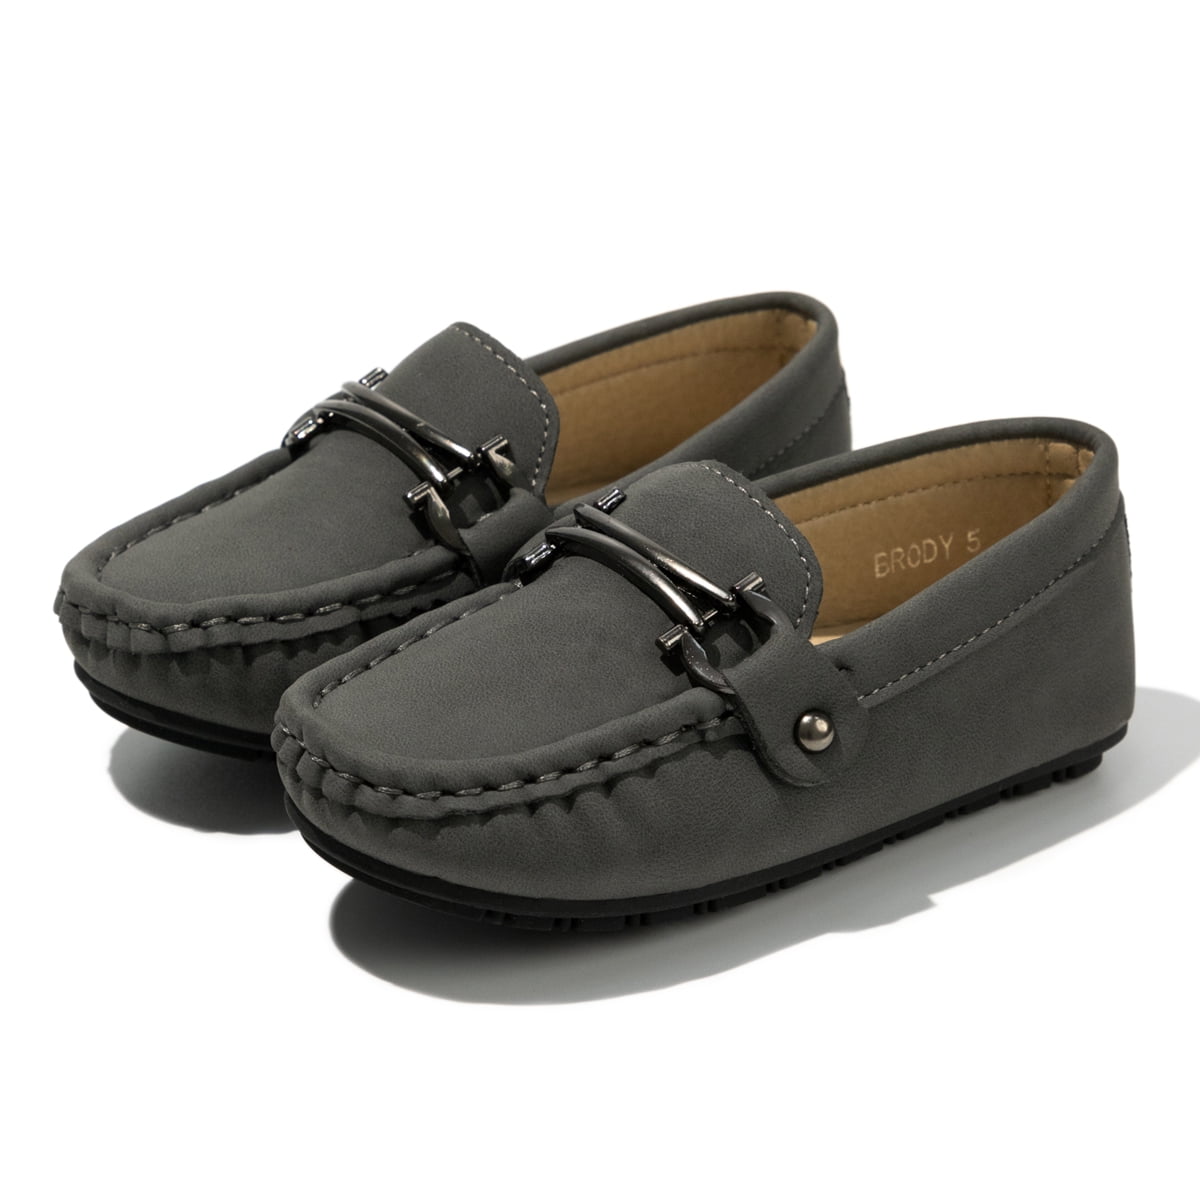 UBELLA Toddler Boys Suede Leather Slip-On Loafer Boat Dress Shoes 